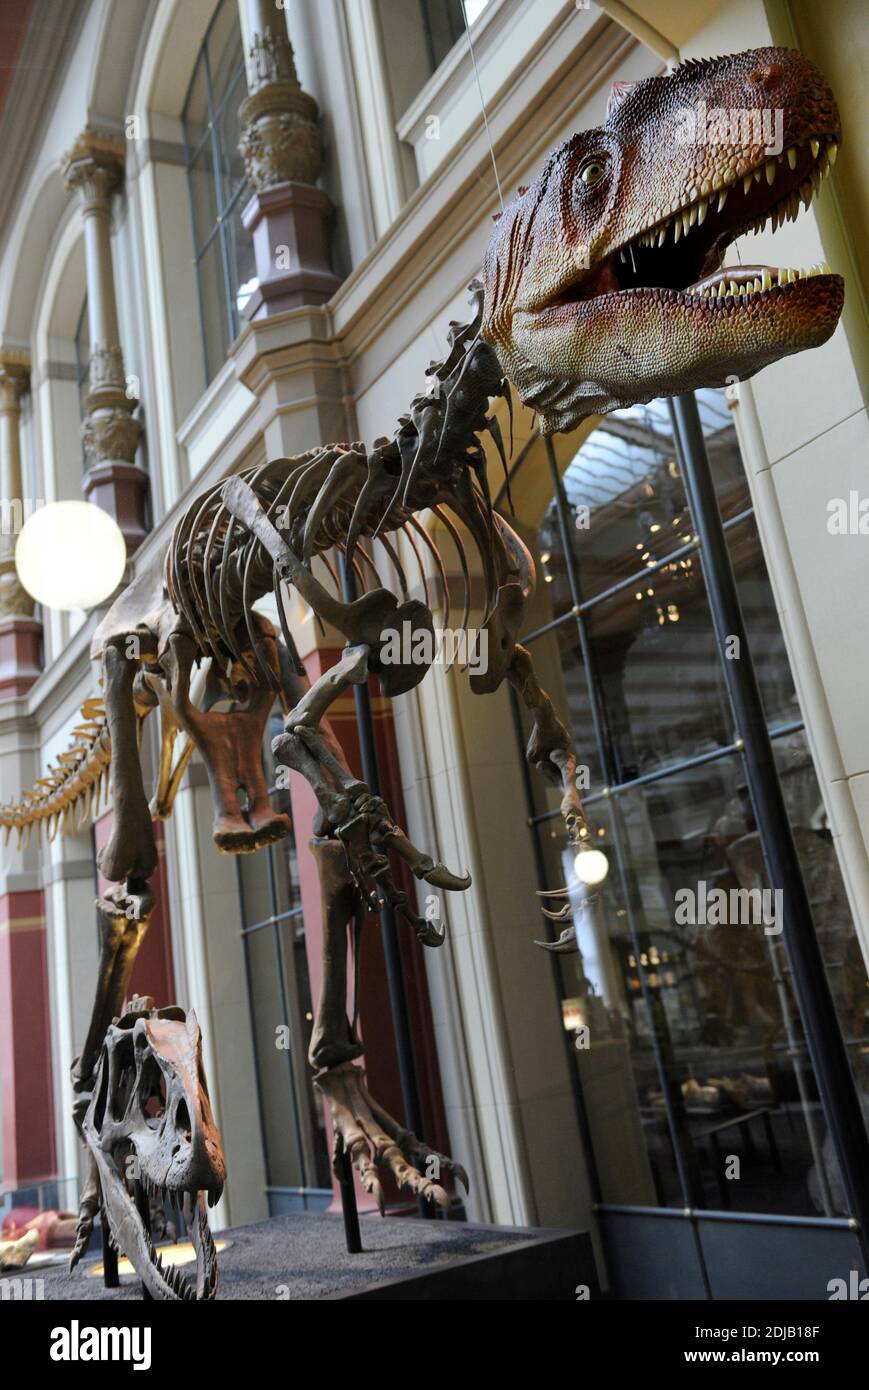 Allosaurus. Género de dinosaurio terópodo carnívoro que vivió hace 155 a 145 millones de años. Período Jurásico tardío. Predador bipedal. Reconstrucción esqueleto de dinosaurio. Museo de Historia Natural, Berlín. Alemania. Foto de stock